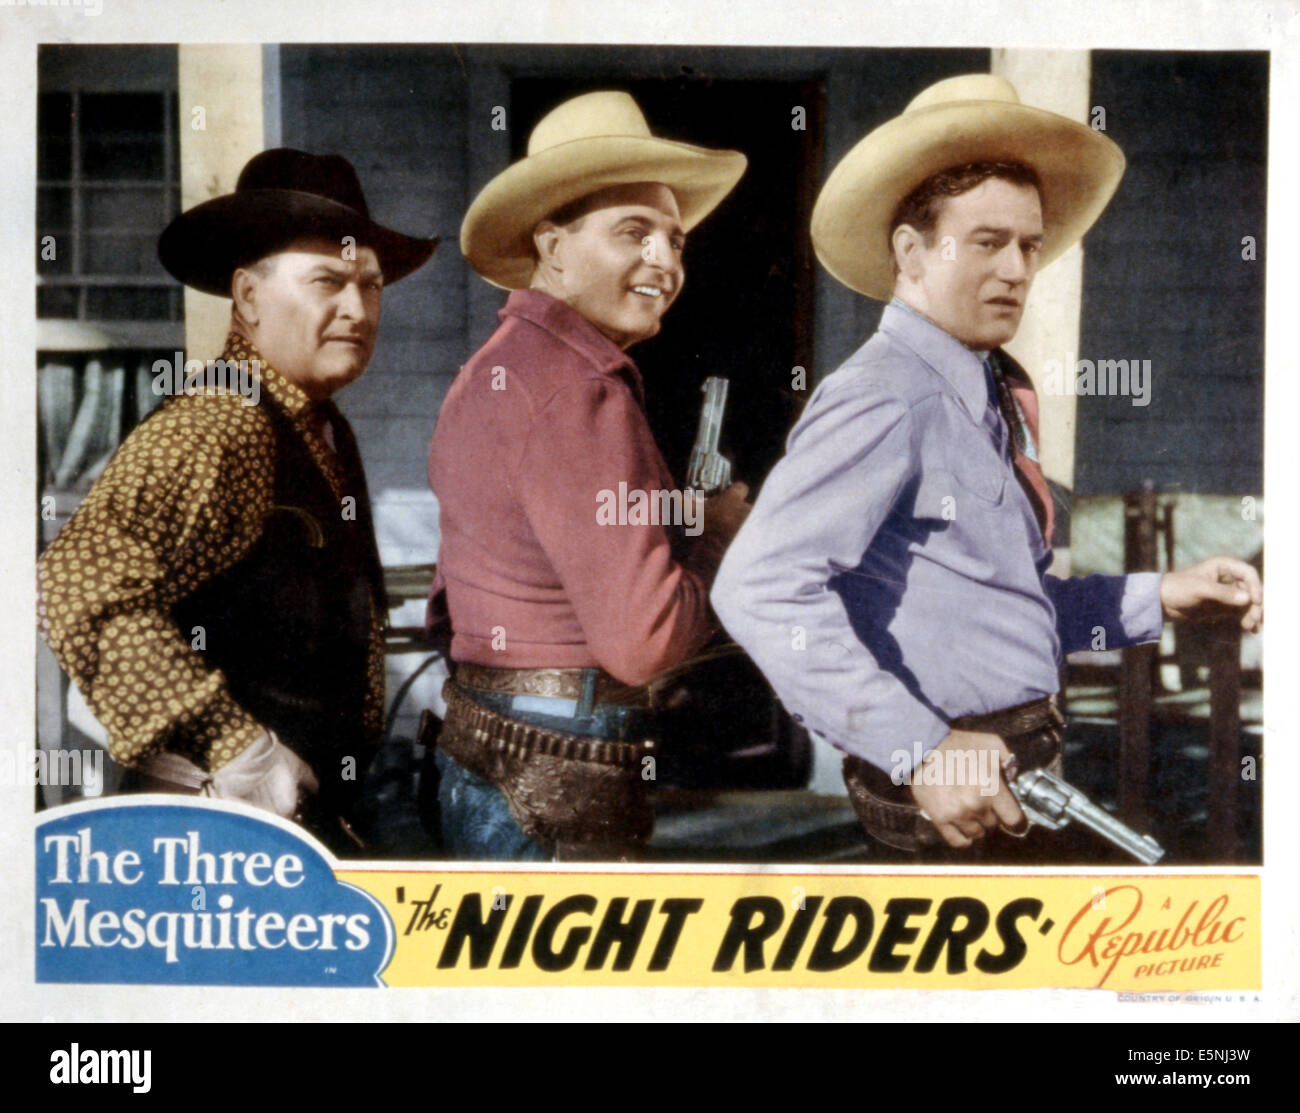 THE NIGHT RIDERS, Max Terhune, Ray Corrigan, John Wayne, lobby card poster art, 1939. Stock Photo